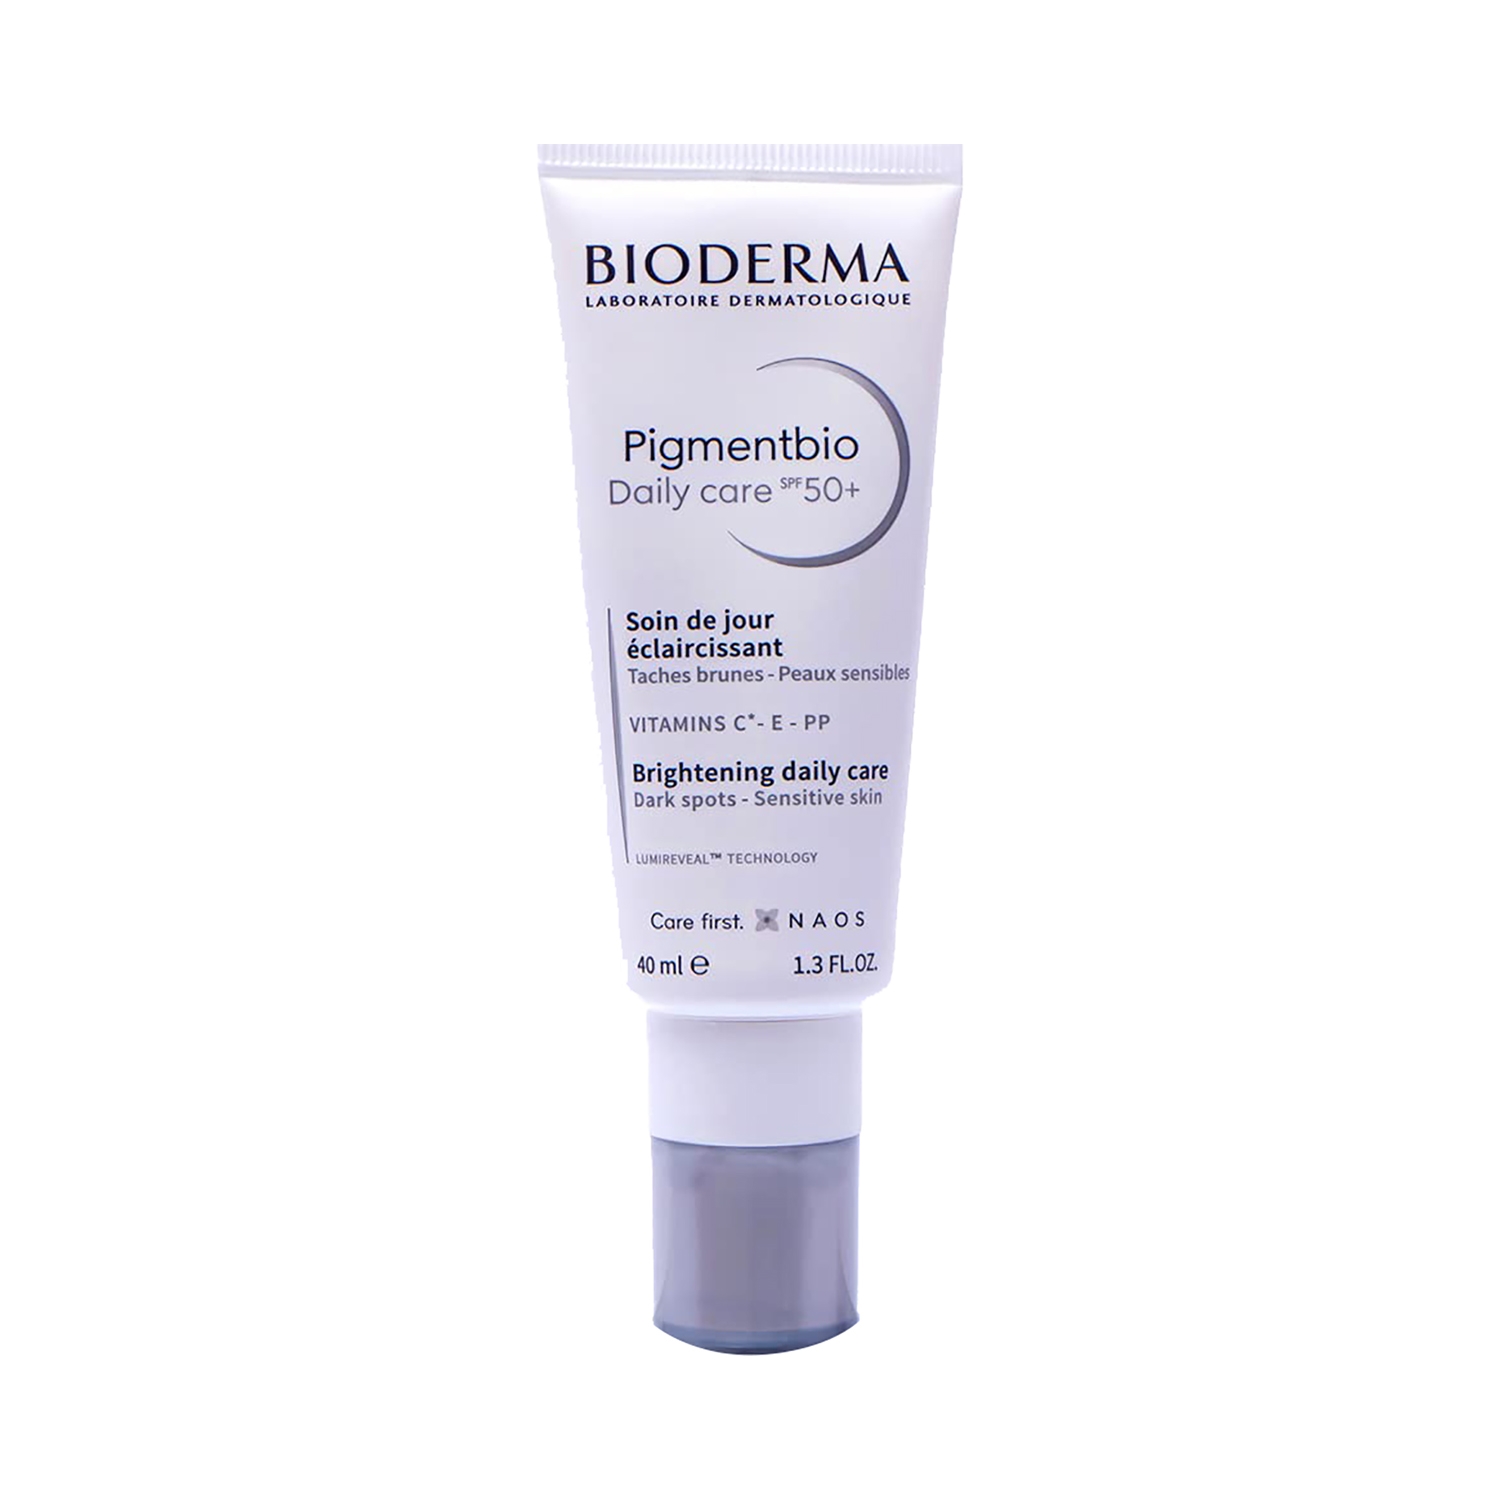 Face Cream - Bioderma Pigmentbio Night Renewer Brightening Overnight Care